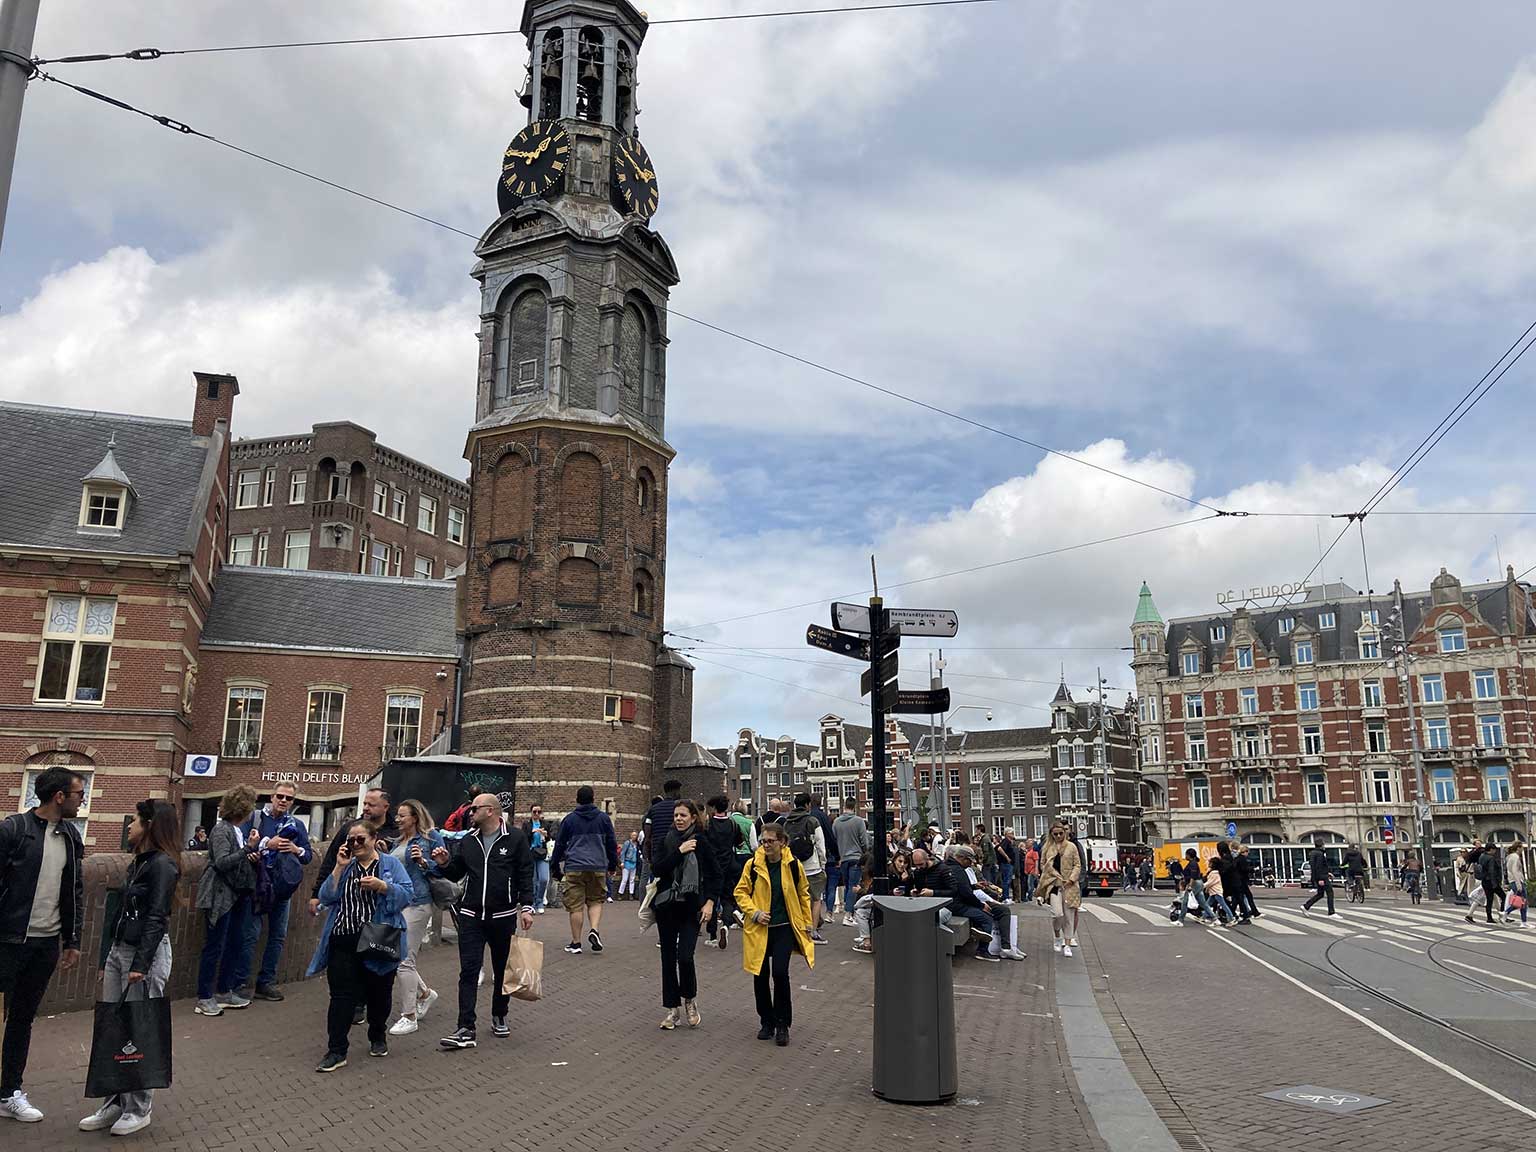 Munttoren, Amsterdam, seen from corner of the Flower Market on Singel towards Rokin